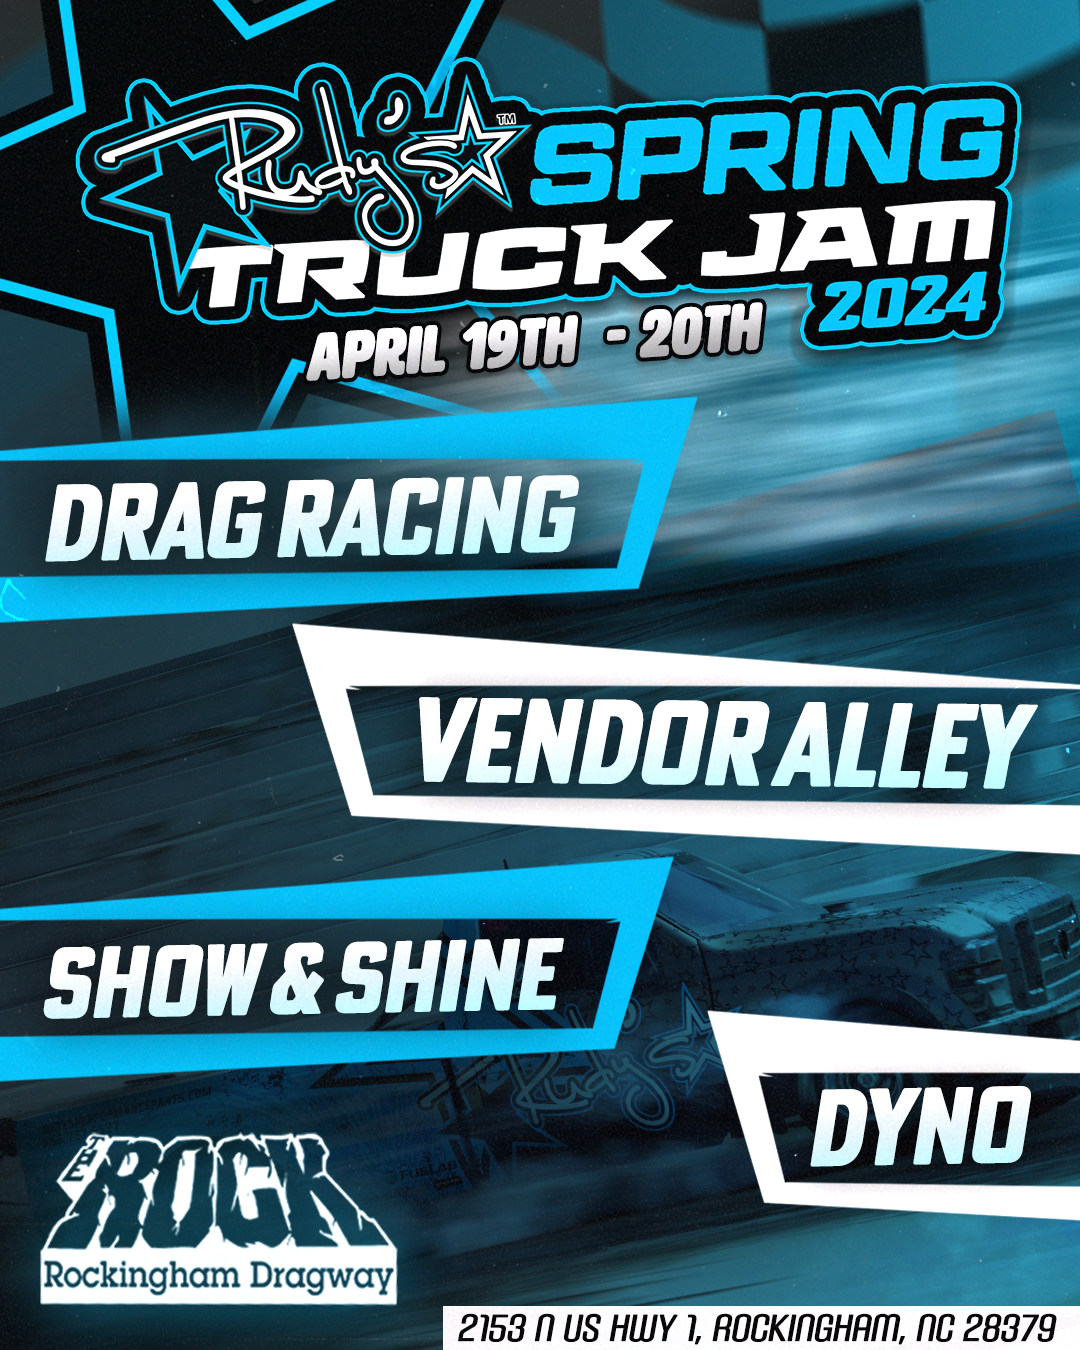 Rudy's Spring Truck Jam 2024